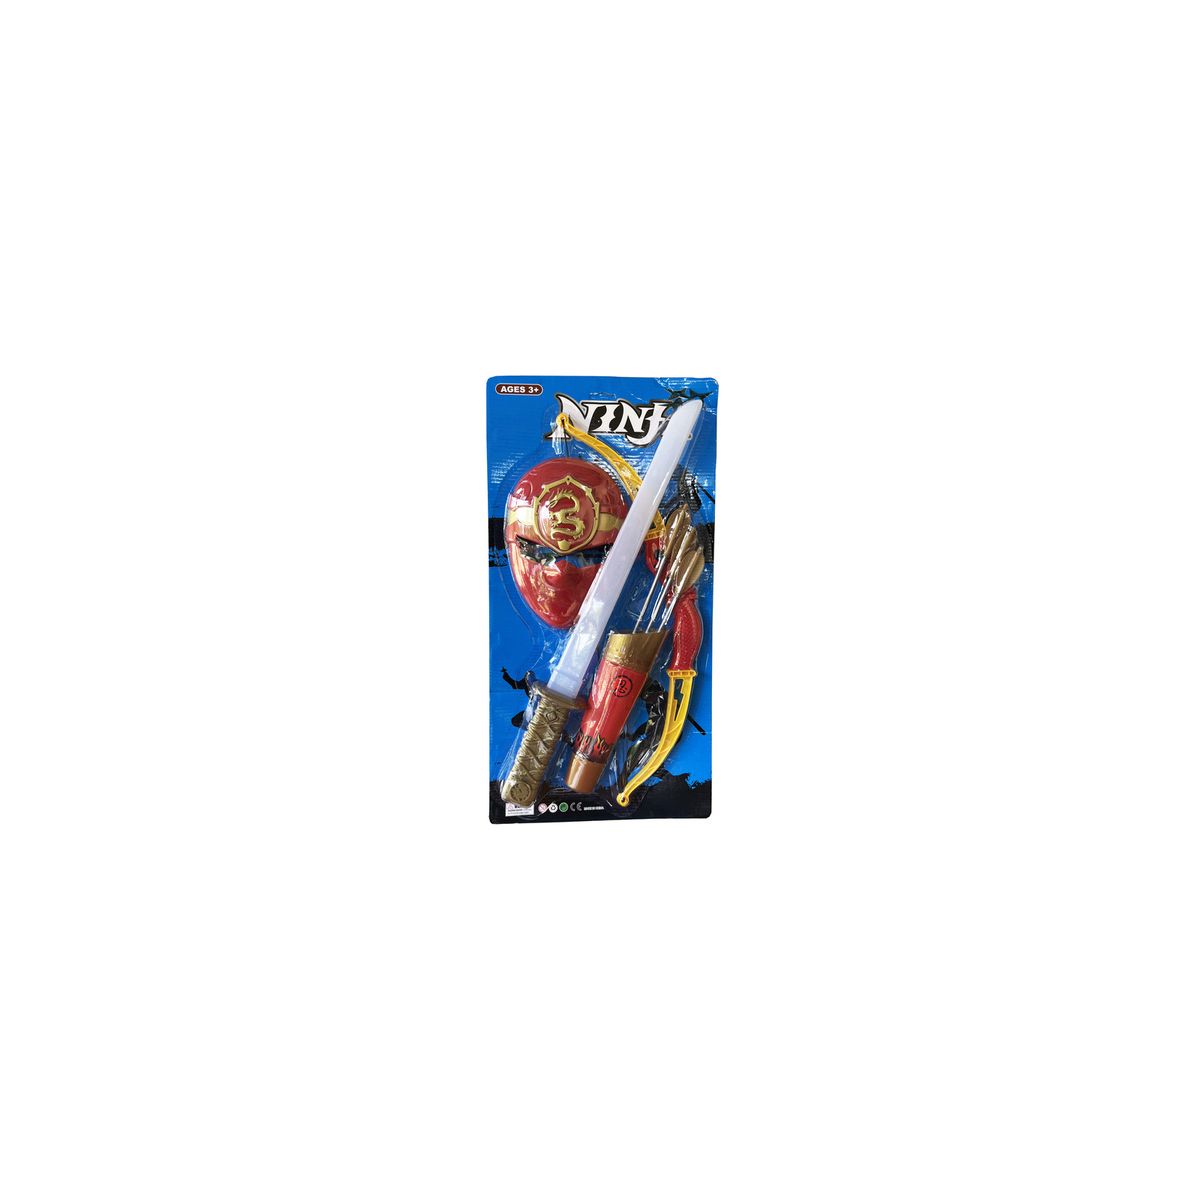 Zestaw Ninja Cabo Toys (L3896)